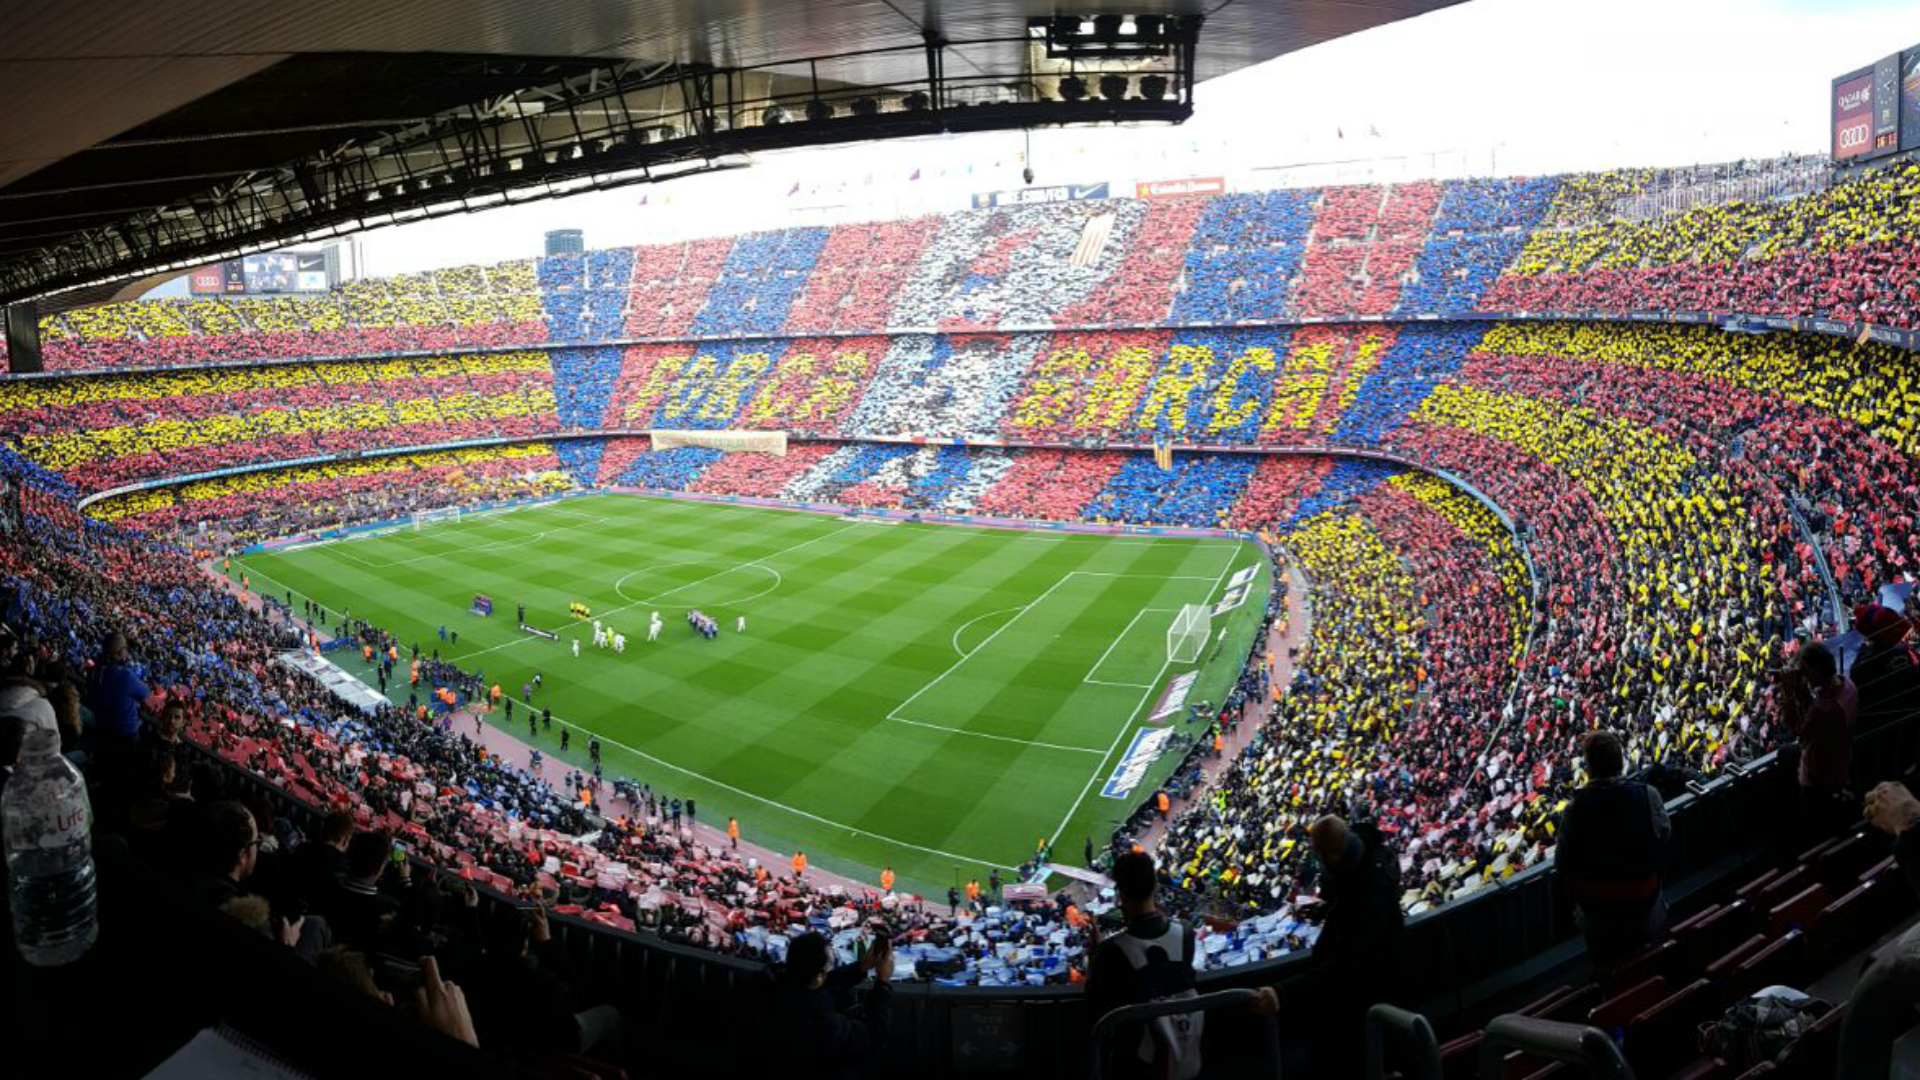 Camp Nou Barcelona Real Madrid La Liga 03122016 - Goal.com1920 x 1080